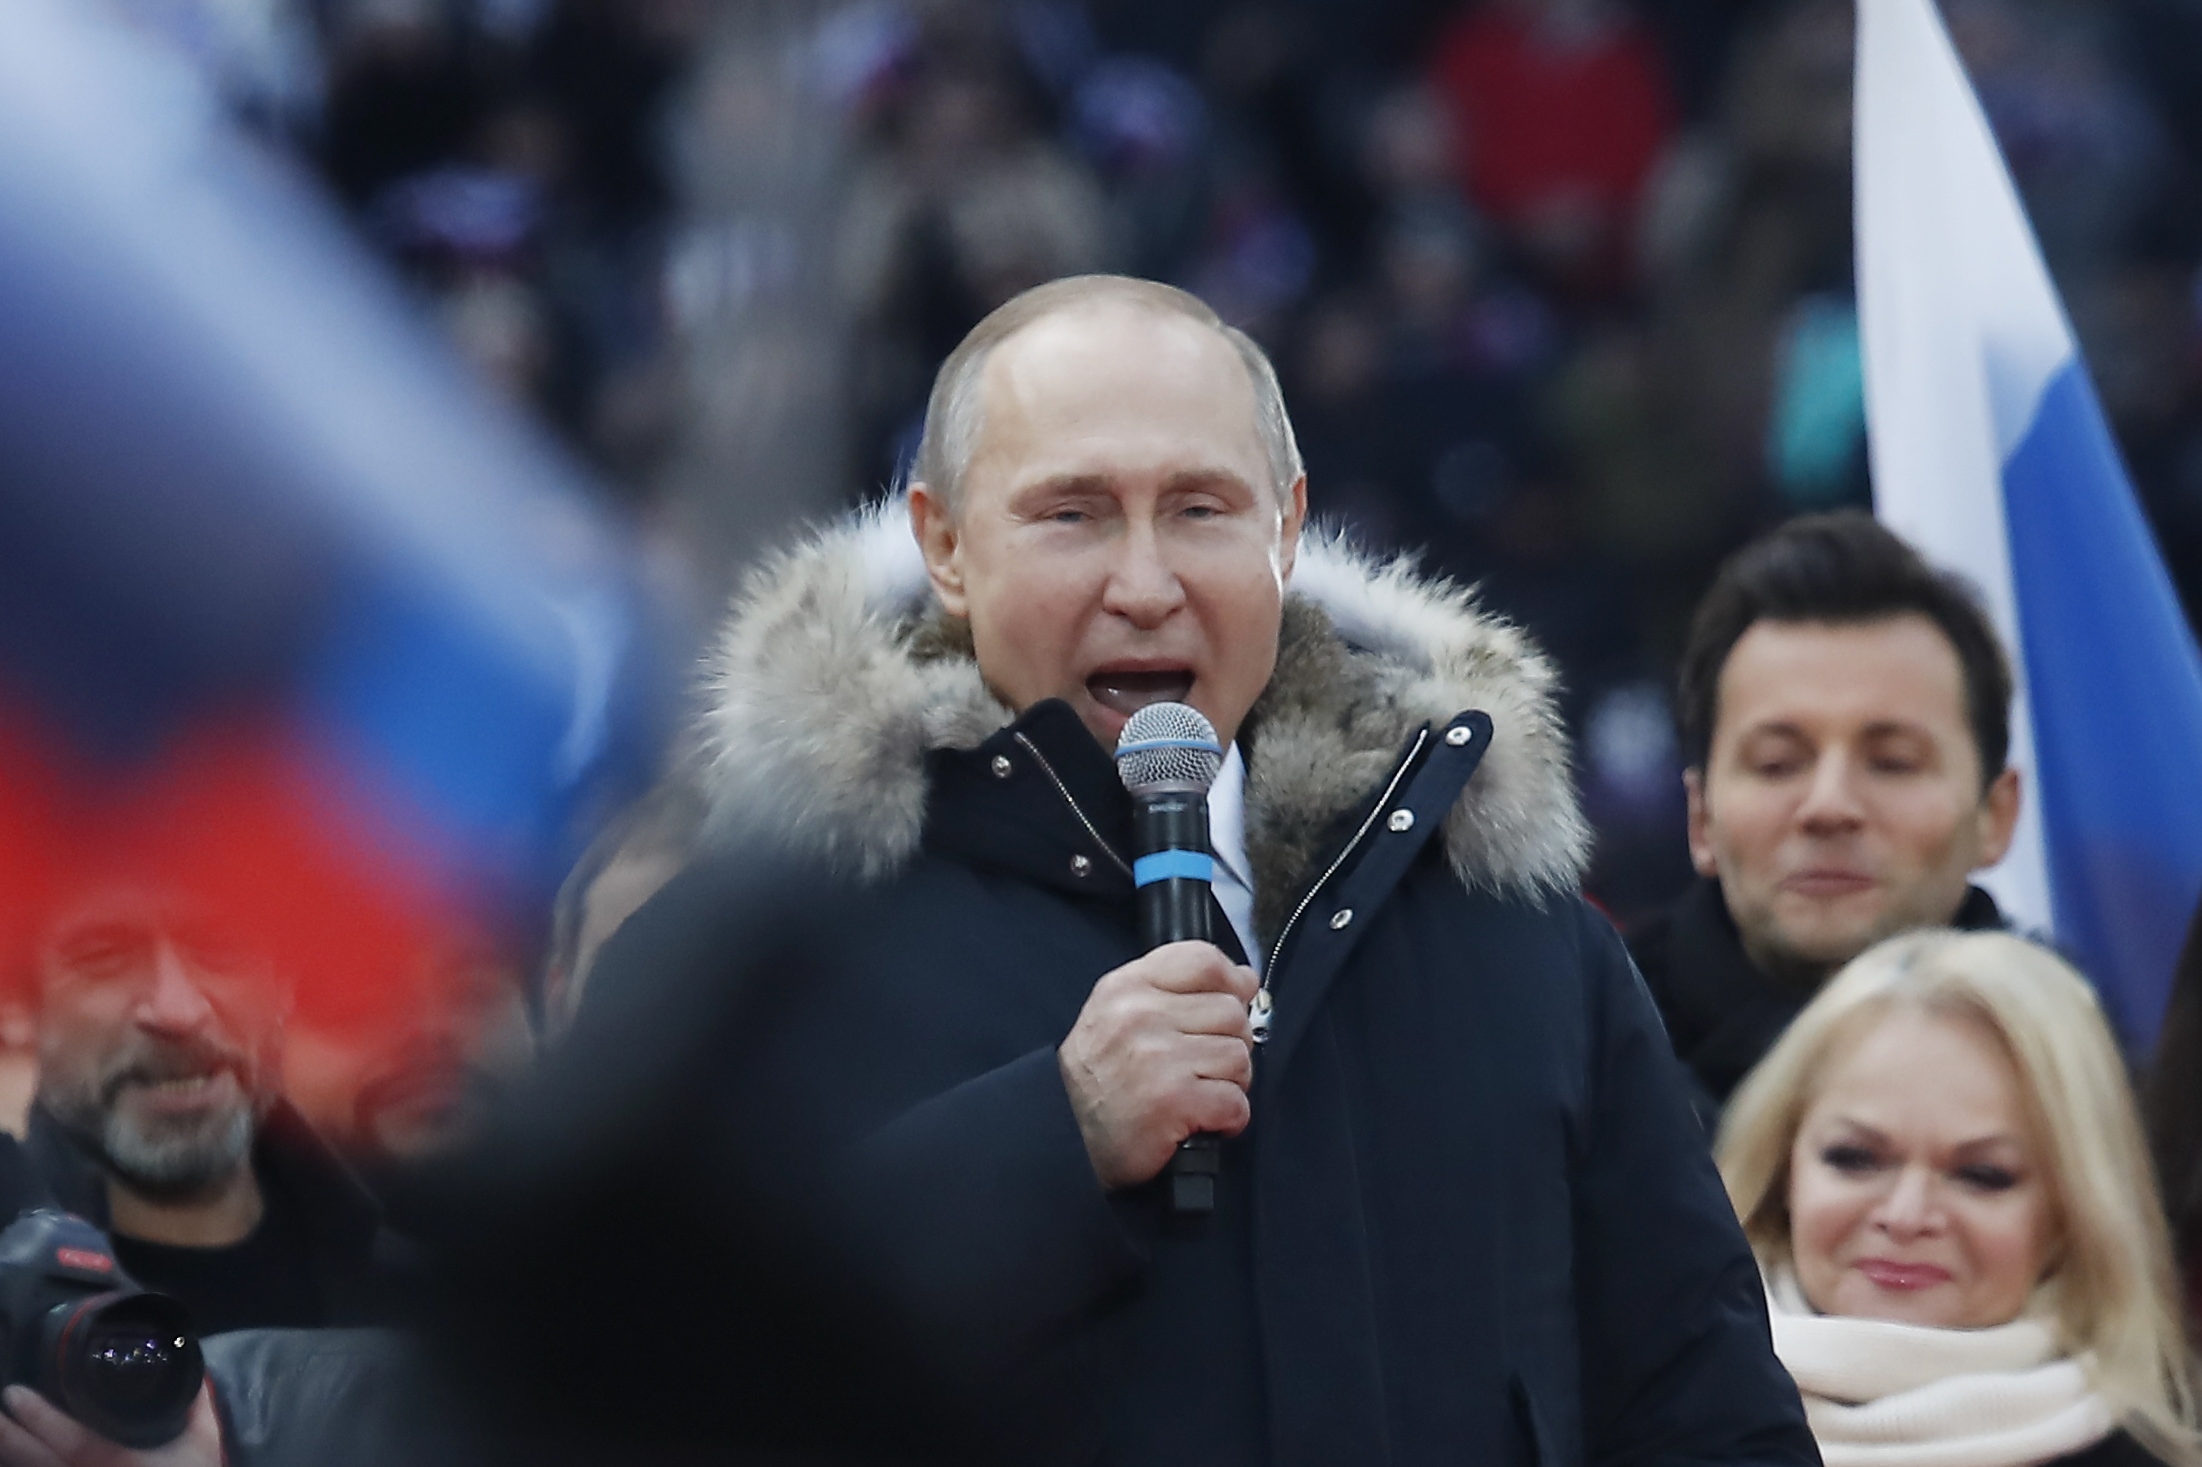 Putin tells US to send evidence of vote meddling